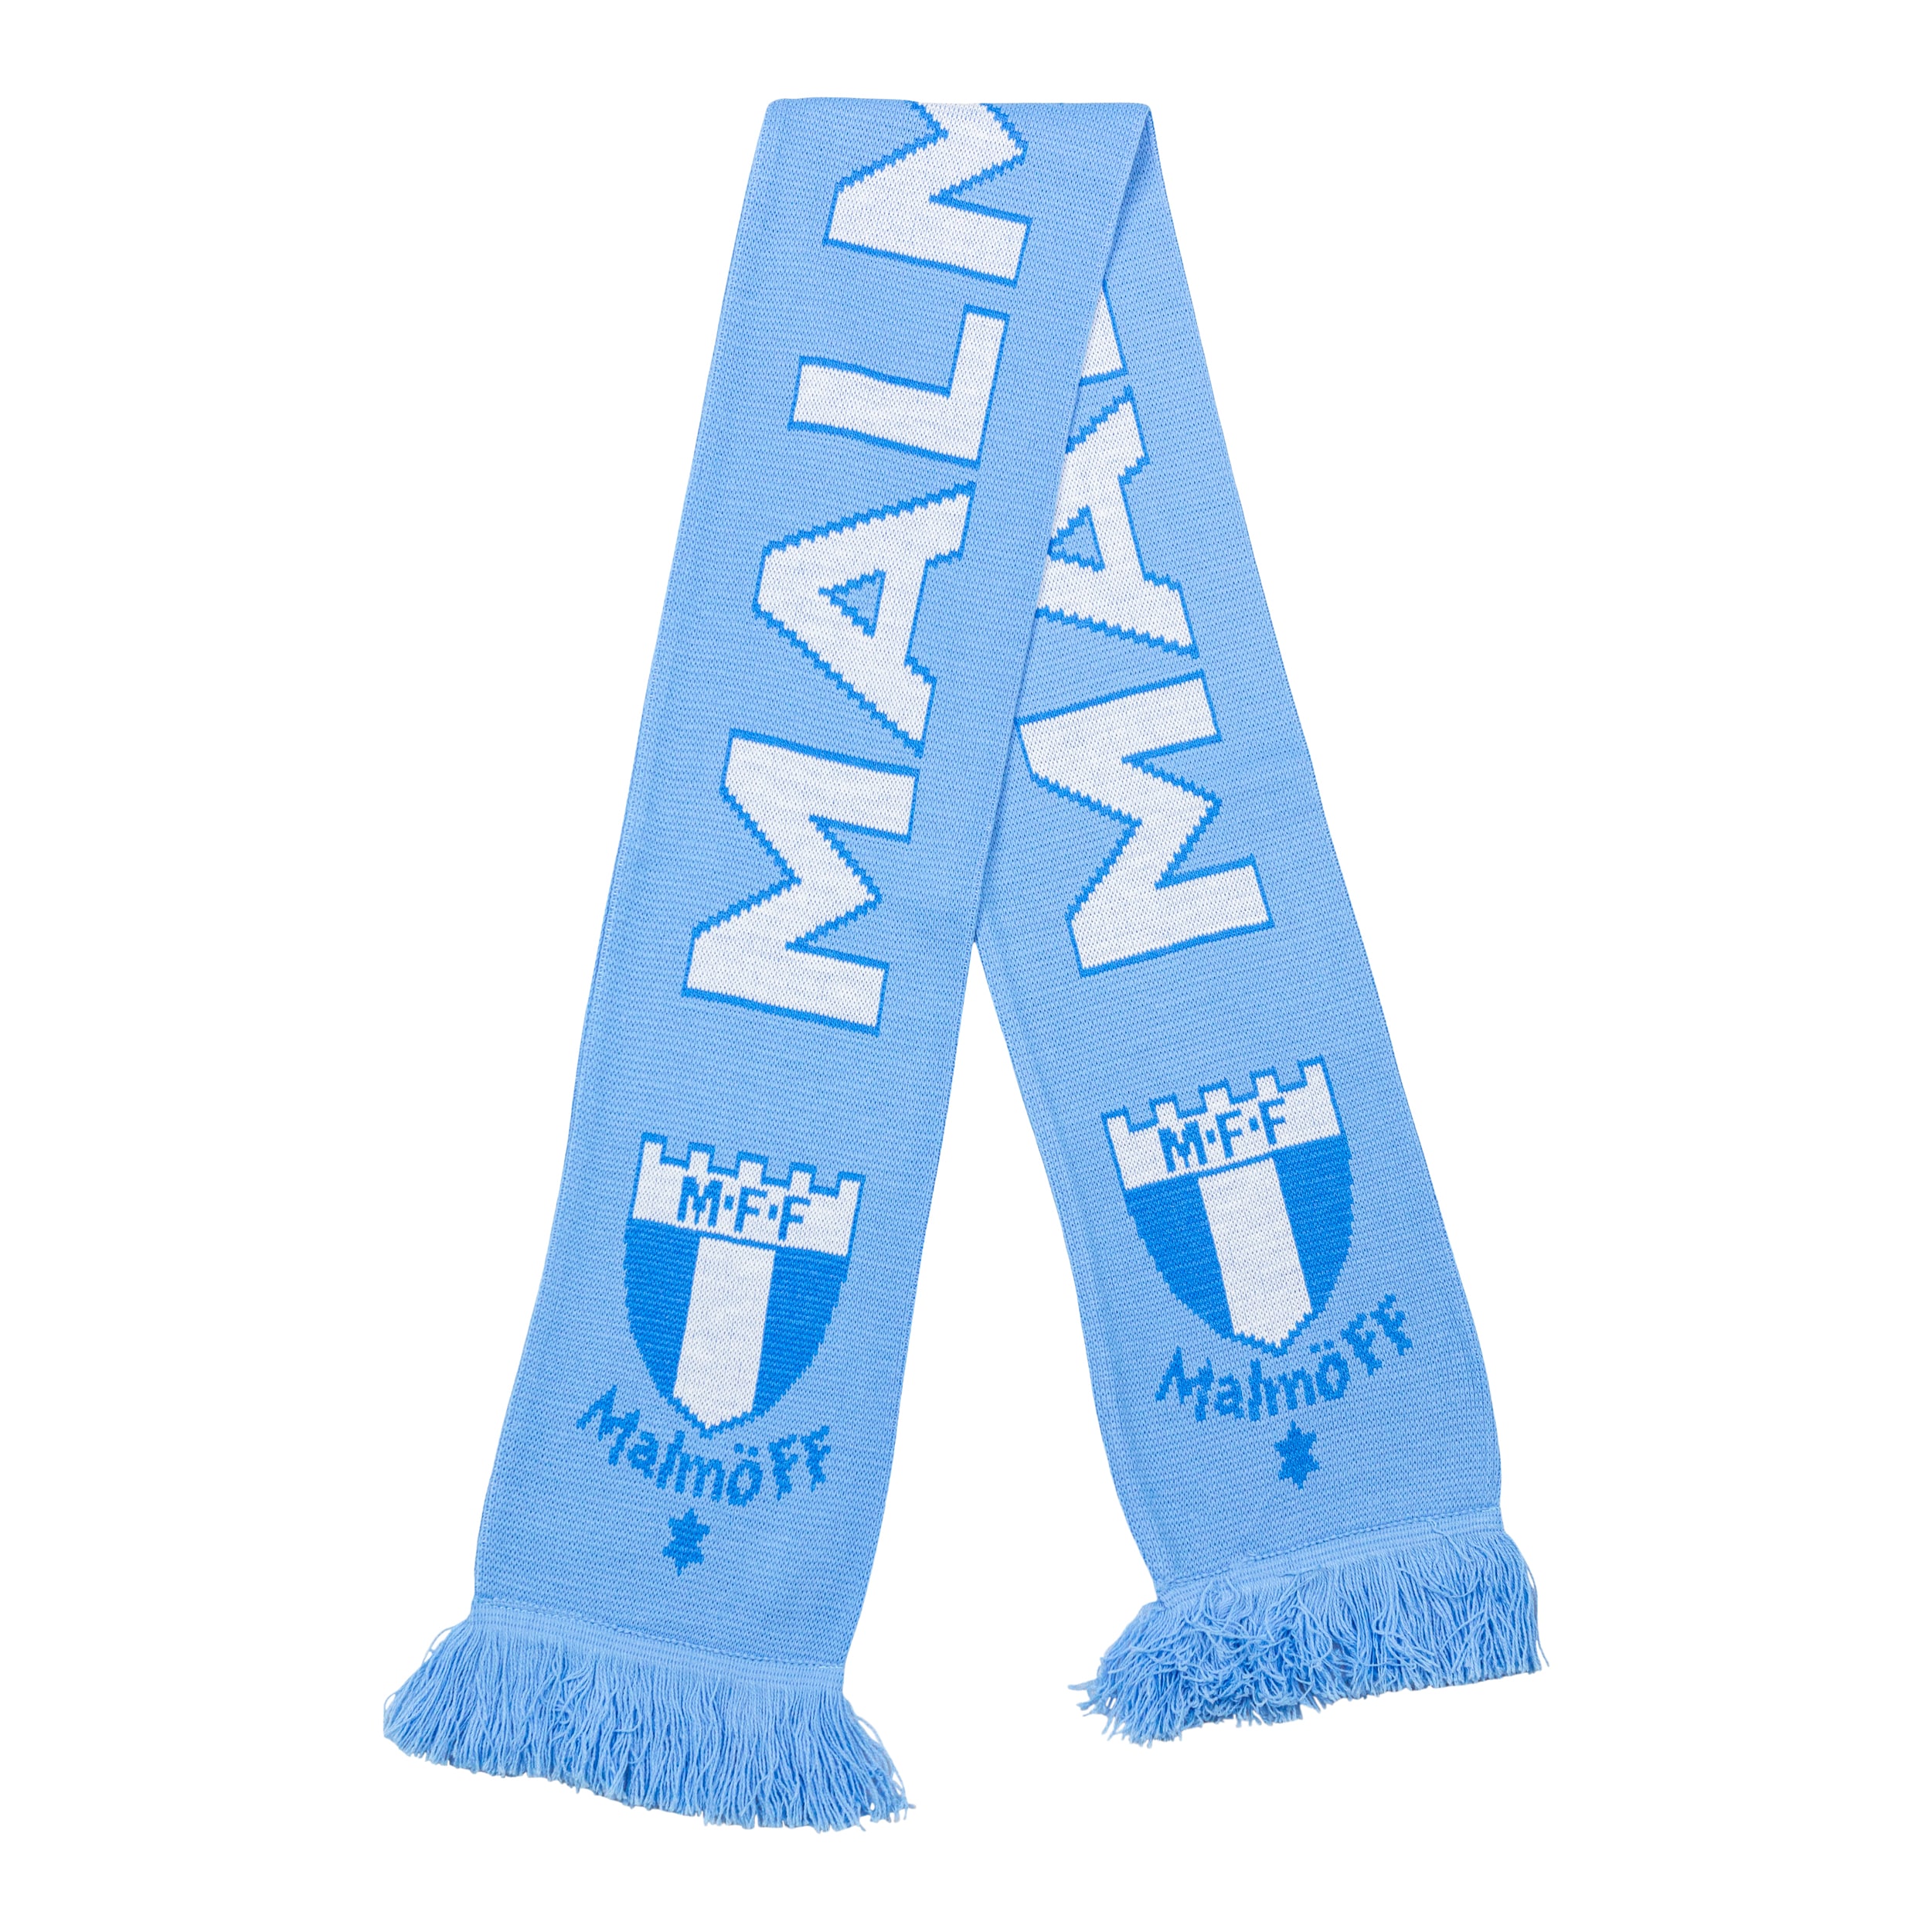 Halsduk ljusblå Malmö FF